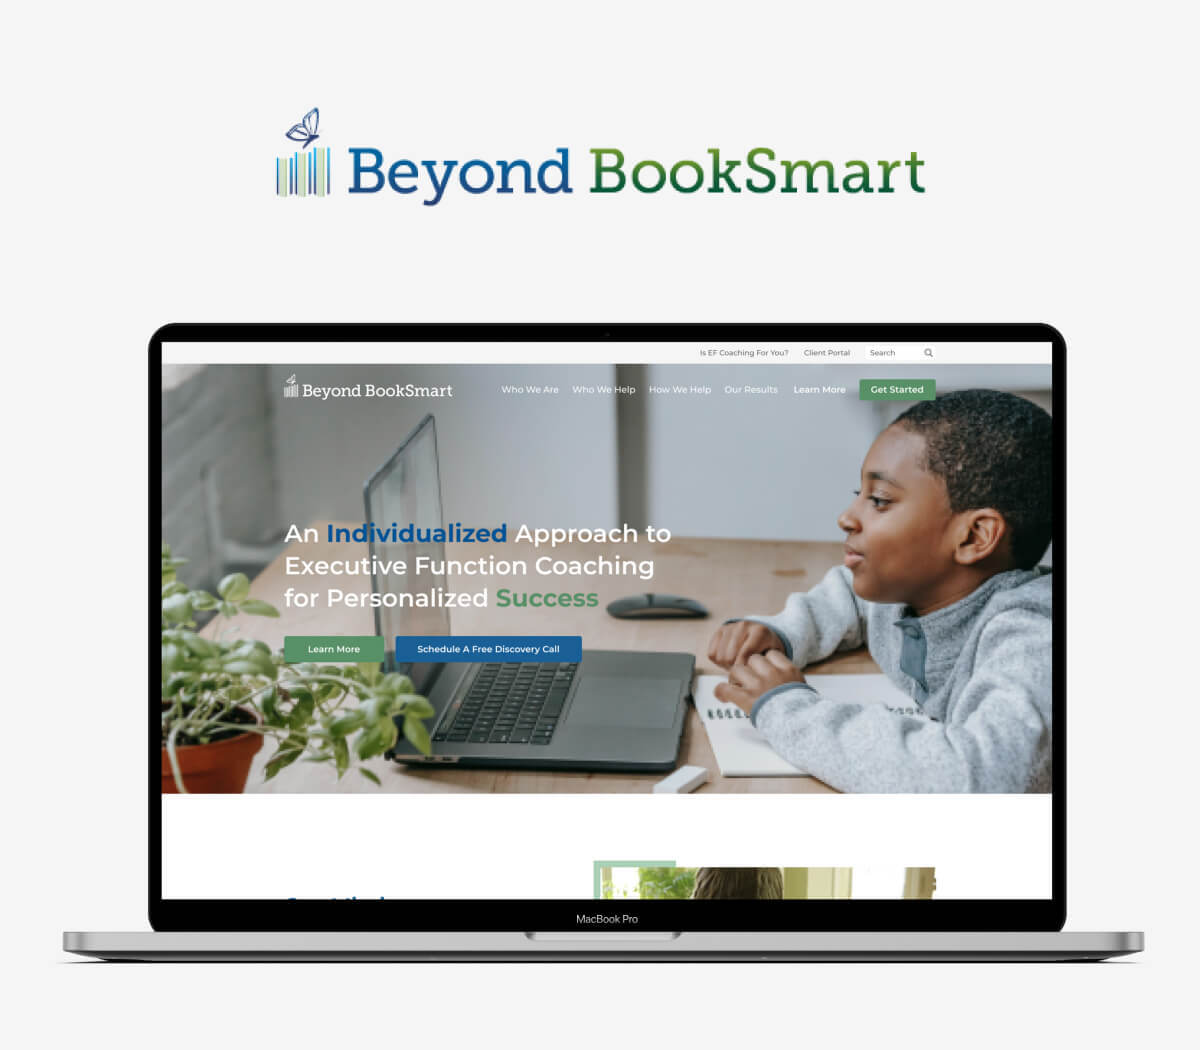 Beyond Booksmart